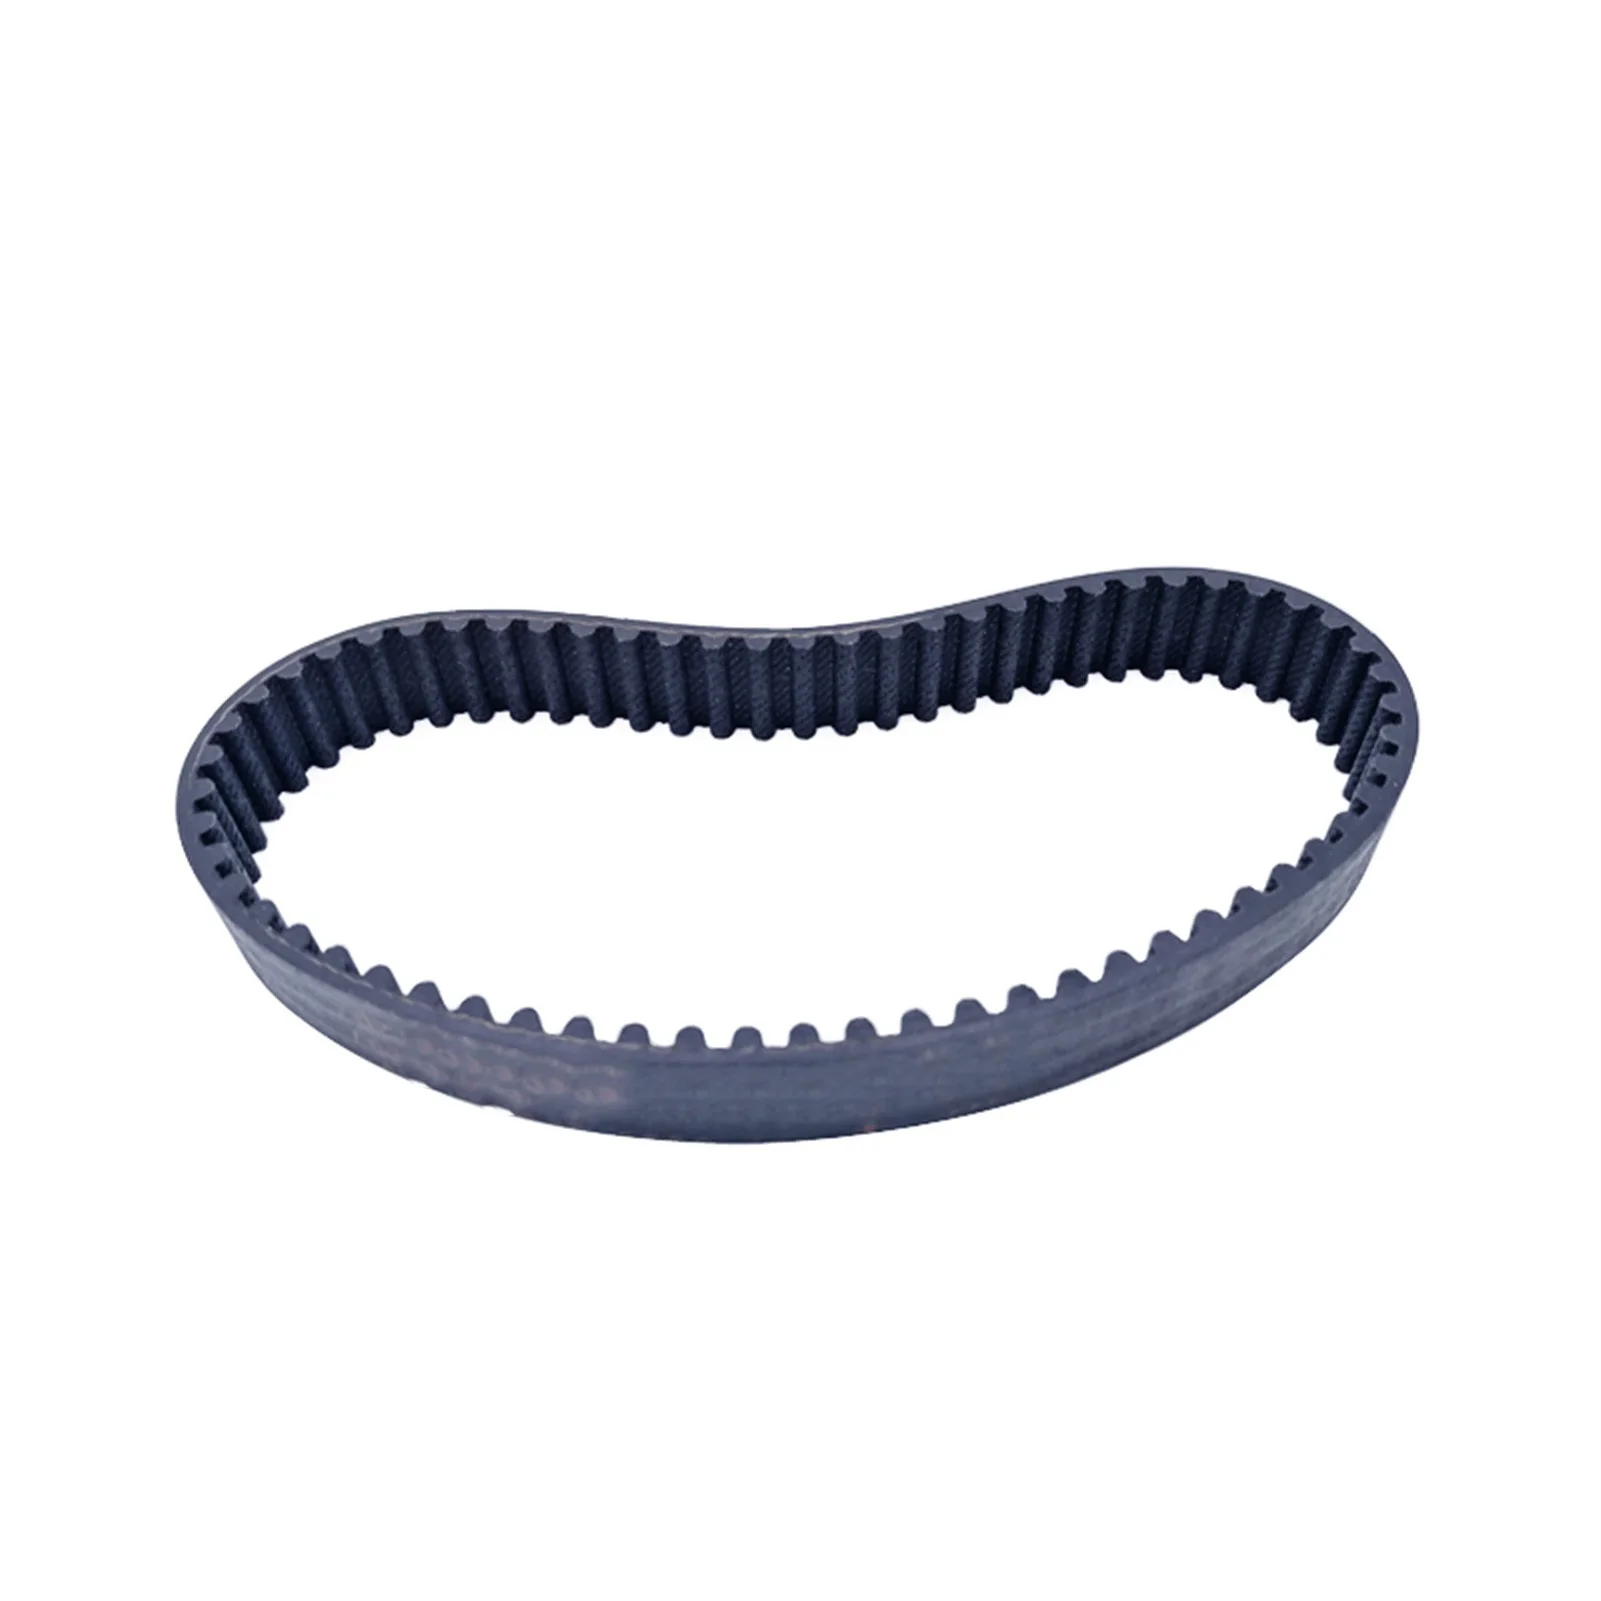 

HTD3M Timing Belt, With Circular Teeth, HTD3M-441/444/447/450/453/456/459/462/465/468, Teeth Pitch 3mm, Belt Width 10/15mm